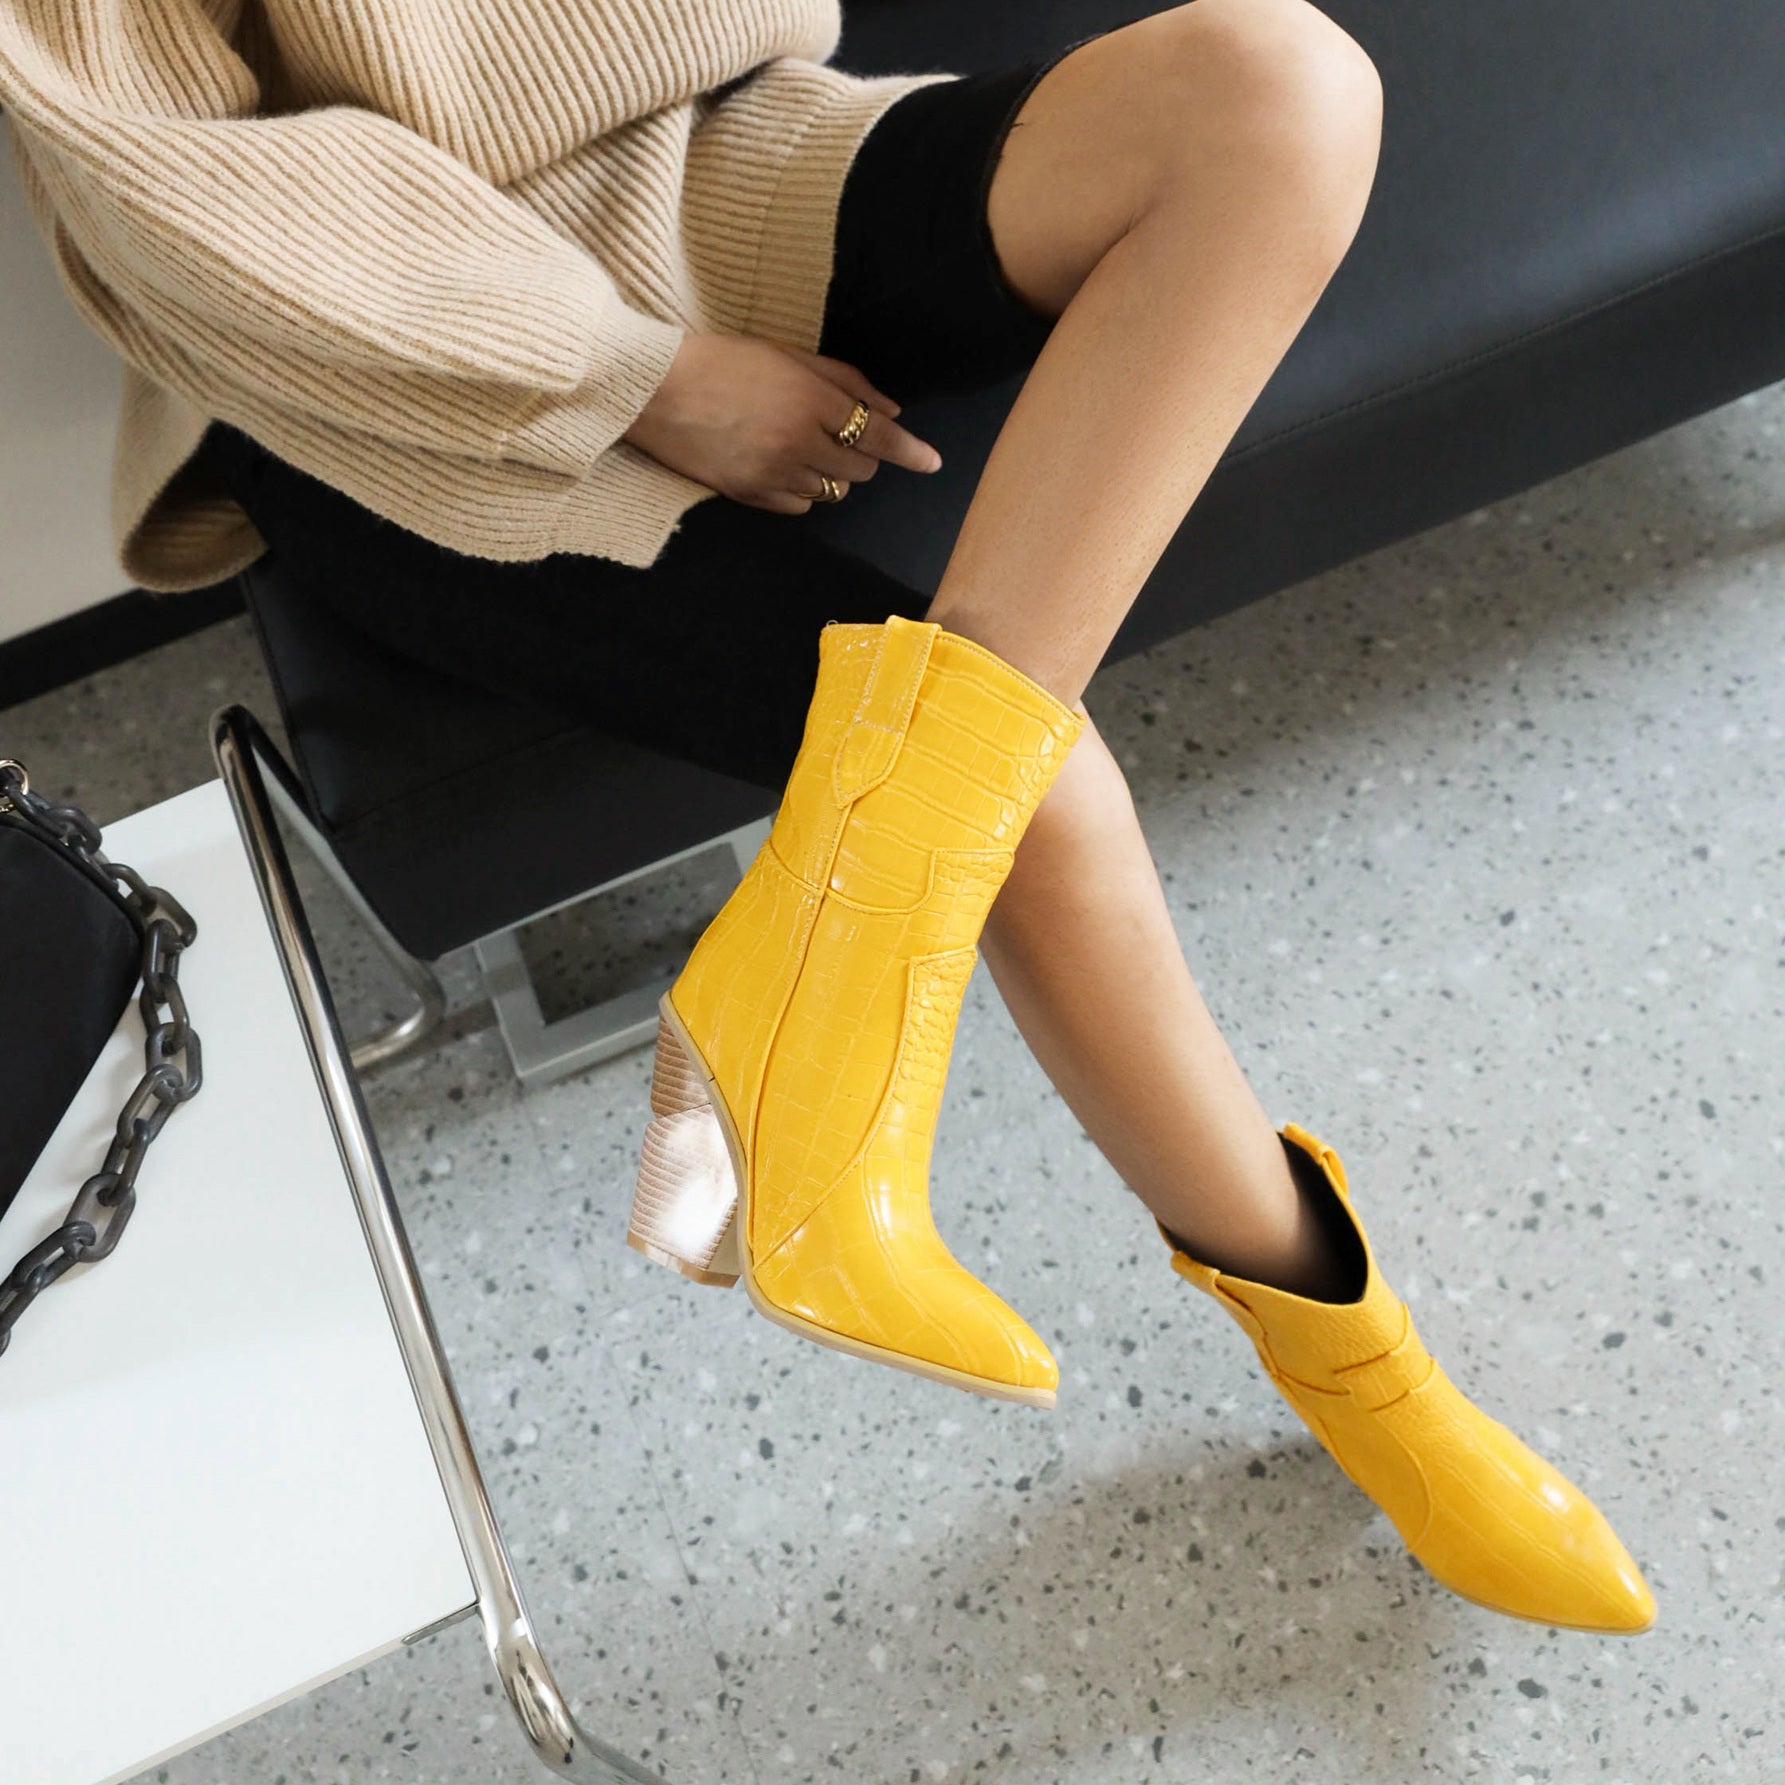 Bigsizeheels Sier magazine high heel ankle boots - Yellow freeshipping - bigsizeheel®-size5-size15 -All Plus Sizes Available!